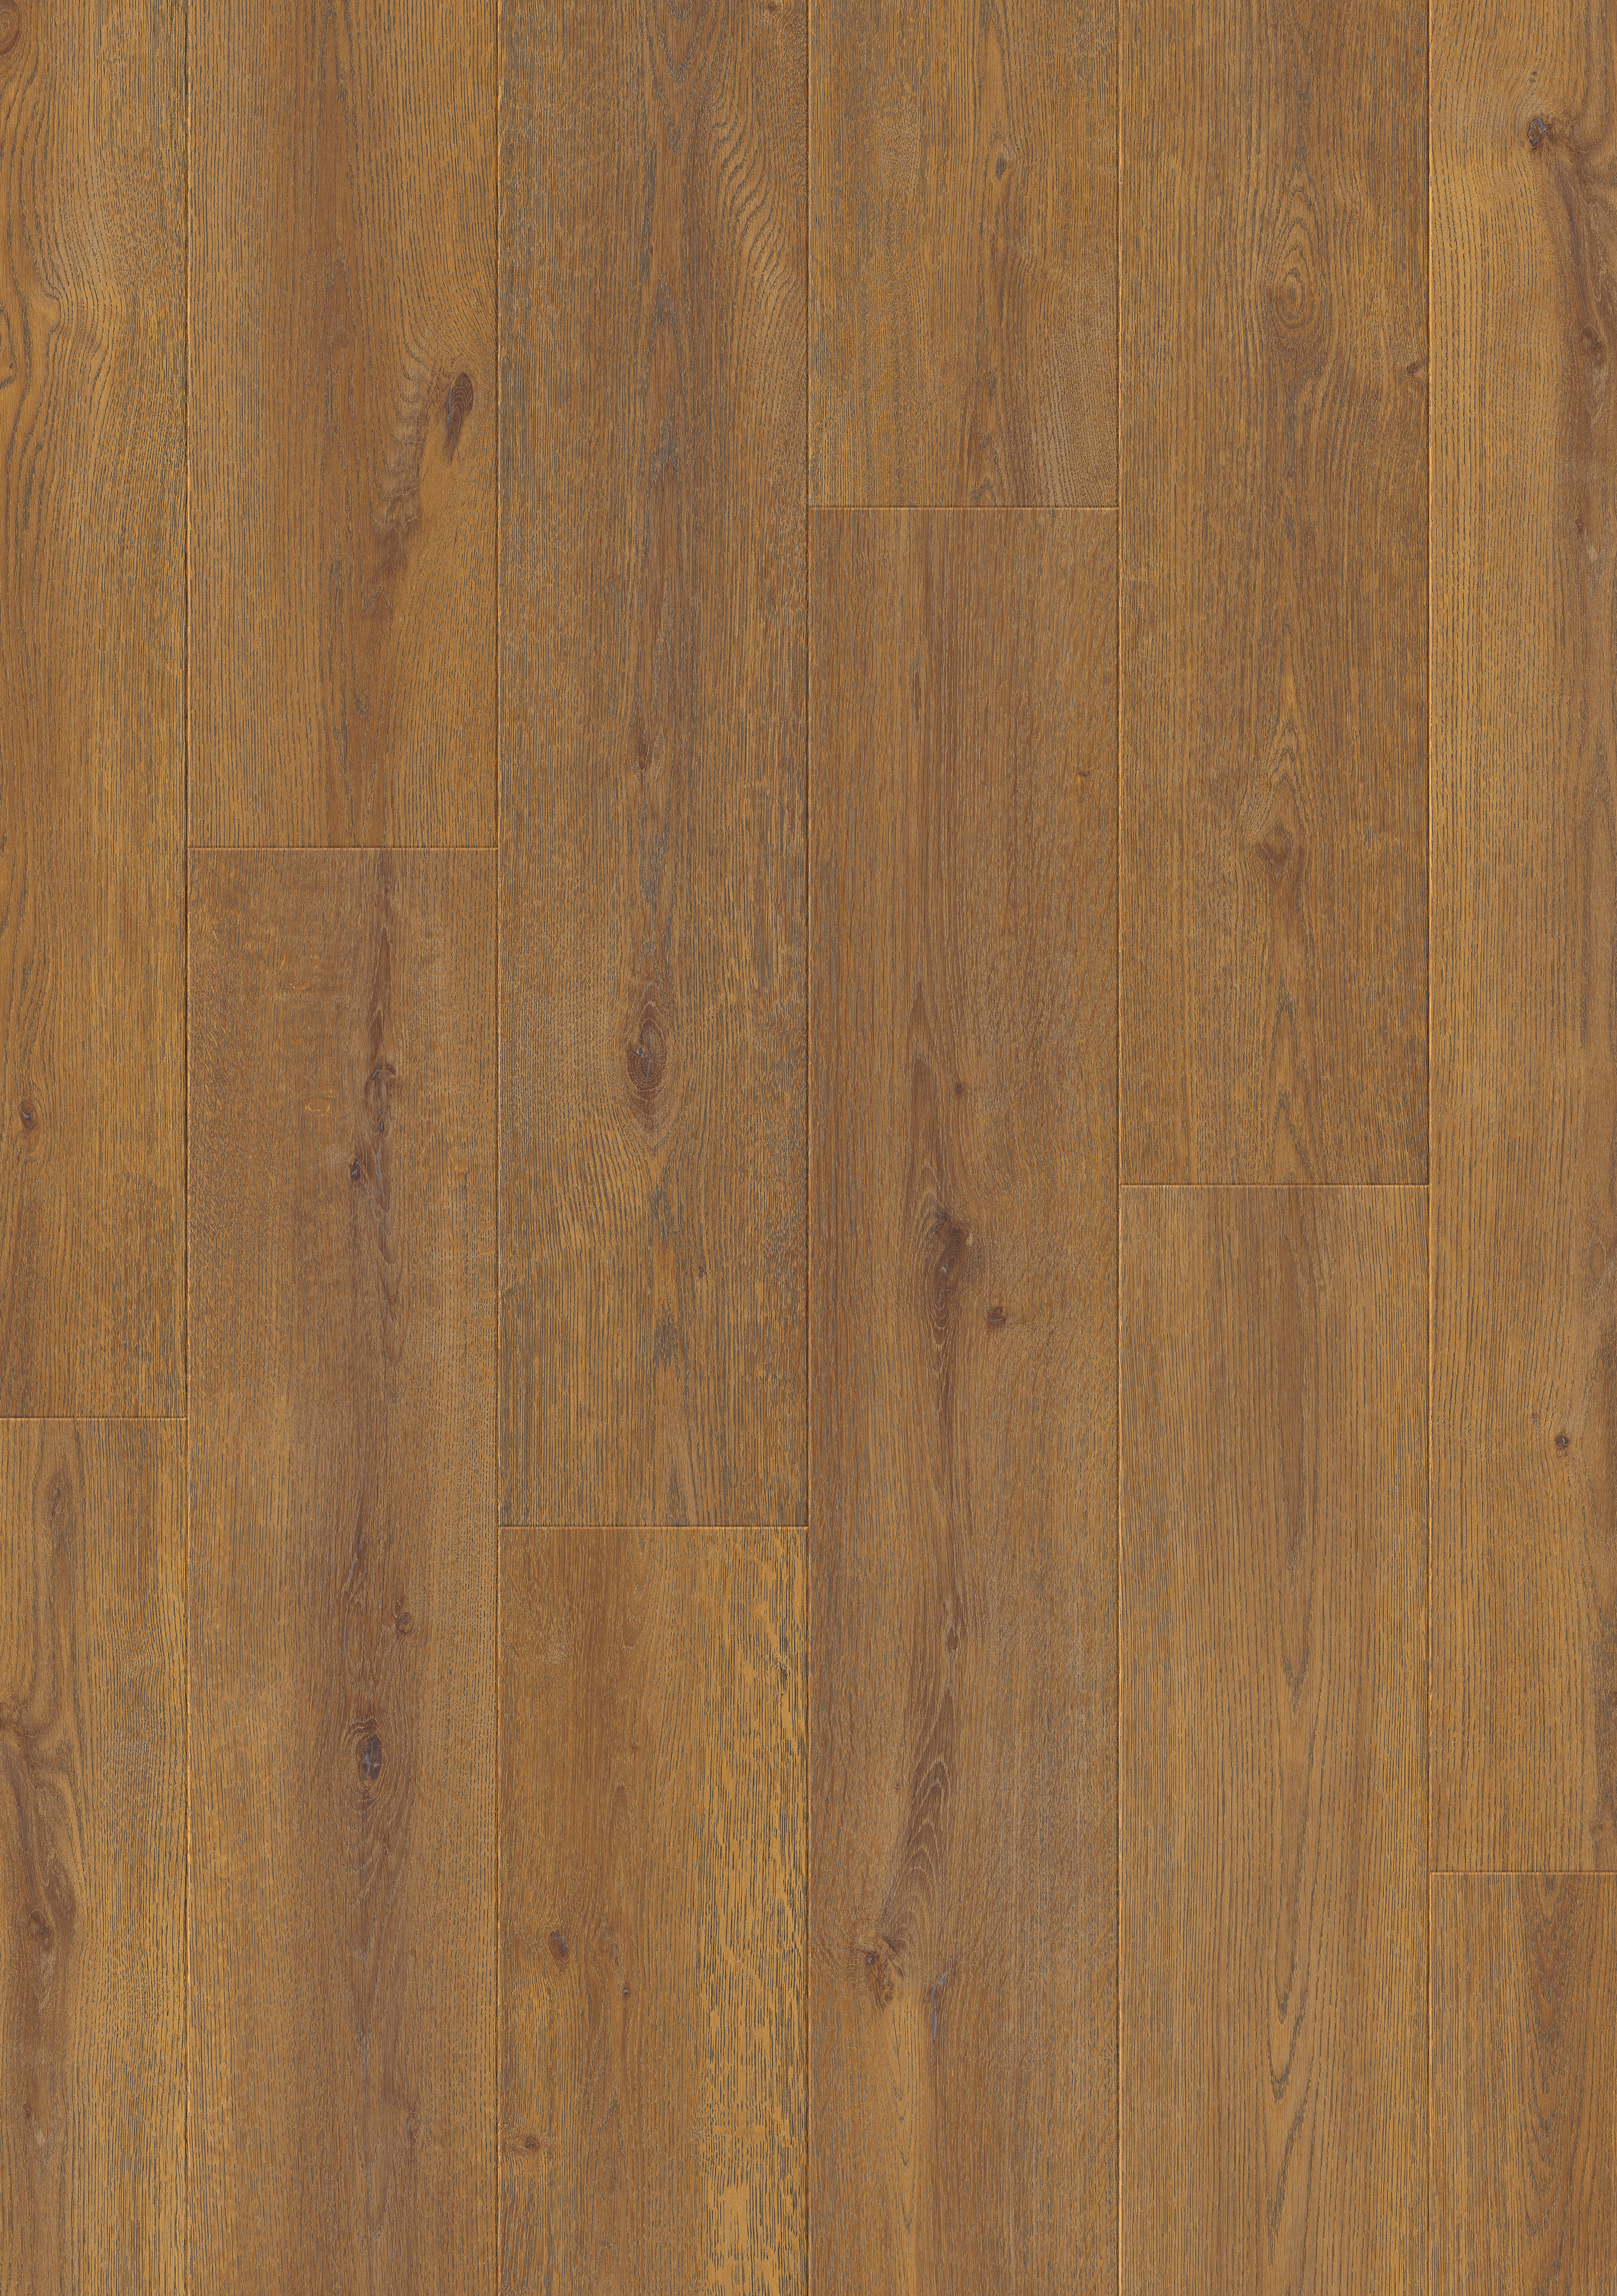 Quick-Step Salto Manhattan Brown Oak 8mm Laminate Flooring - Sample